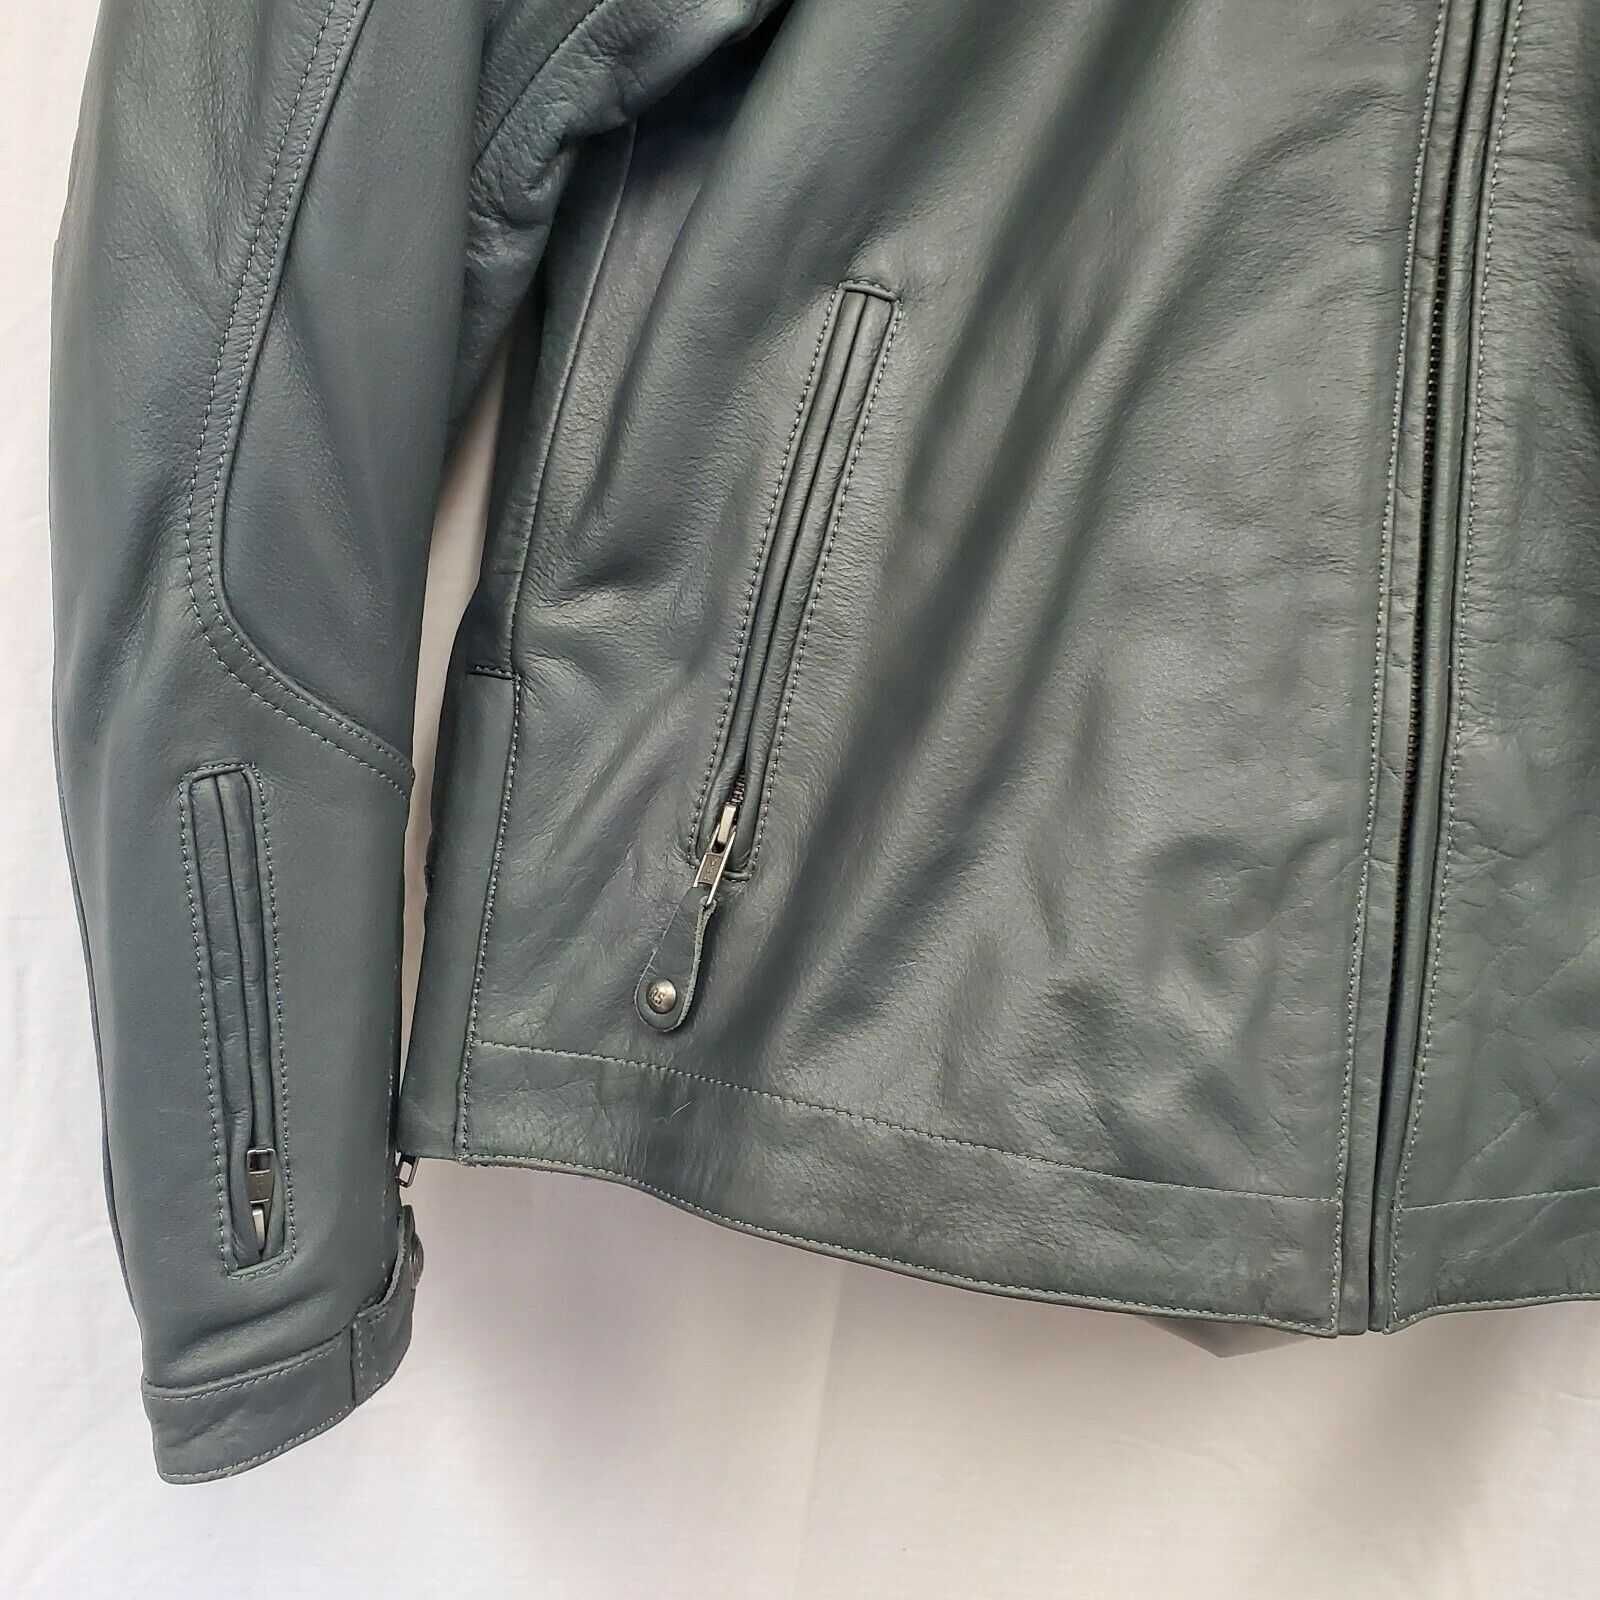 Roland Sands Design RSD Jagger кожанная мото куртка